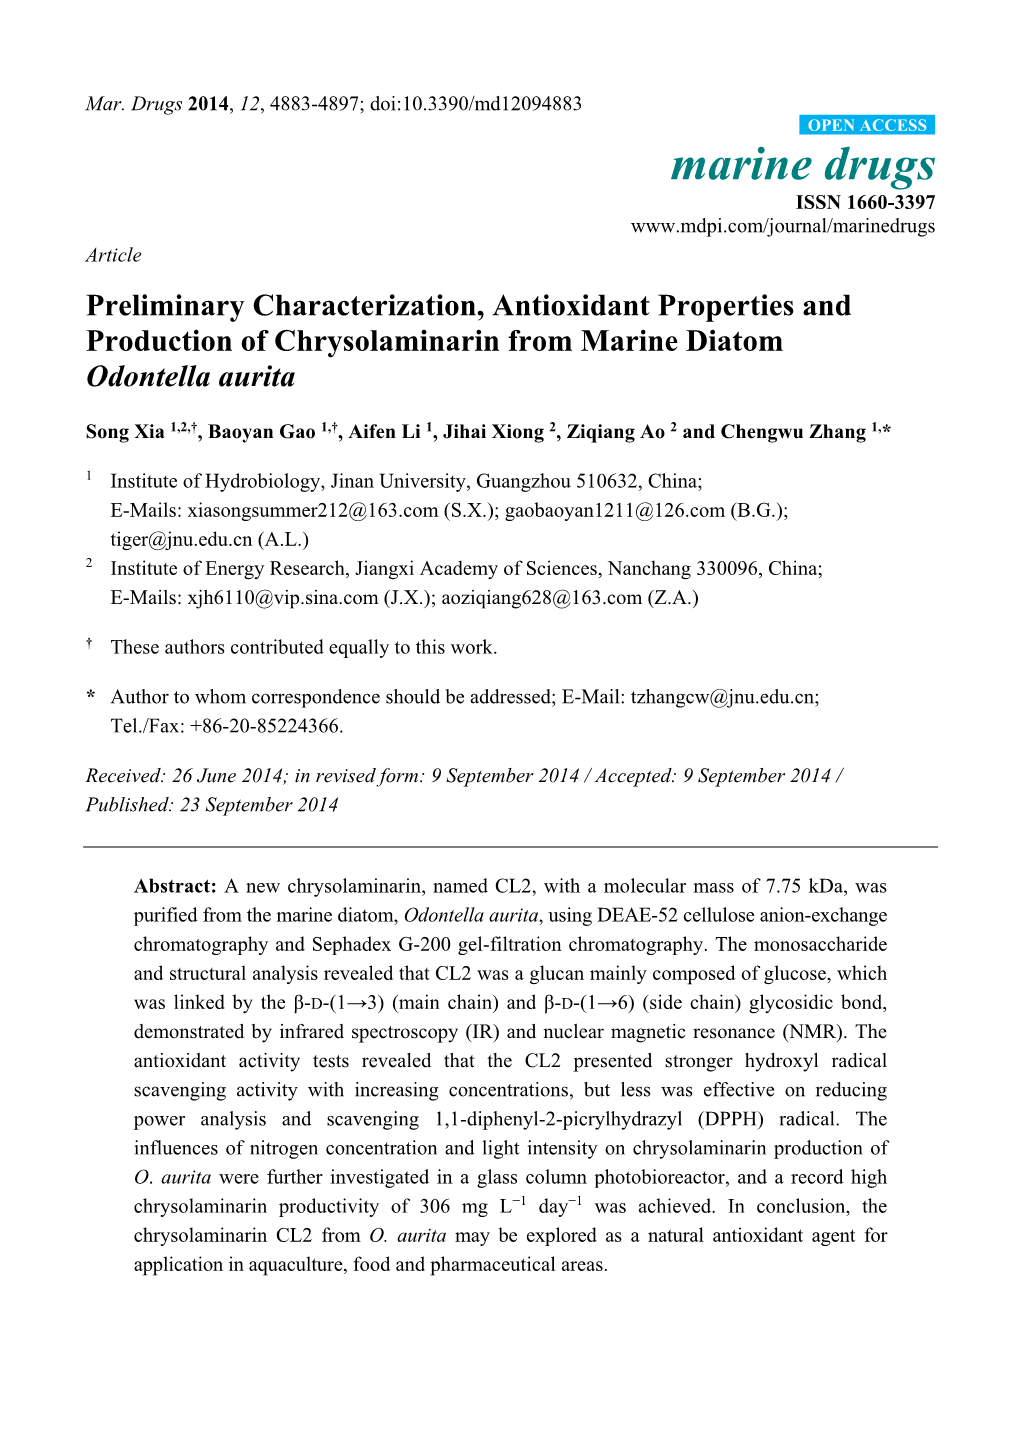 Preliminary Characterization, Antioxidant Properties and Production of Chrysolaminarin from Marine Diatom Odontella Aurita